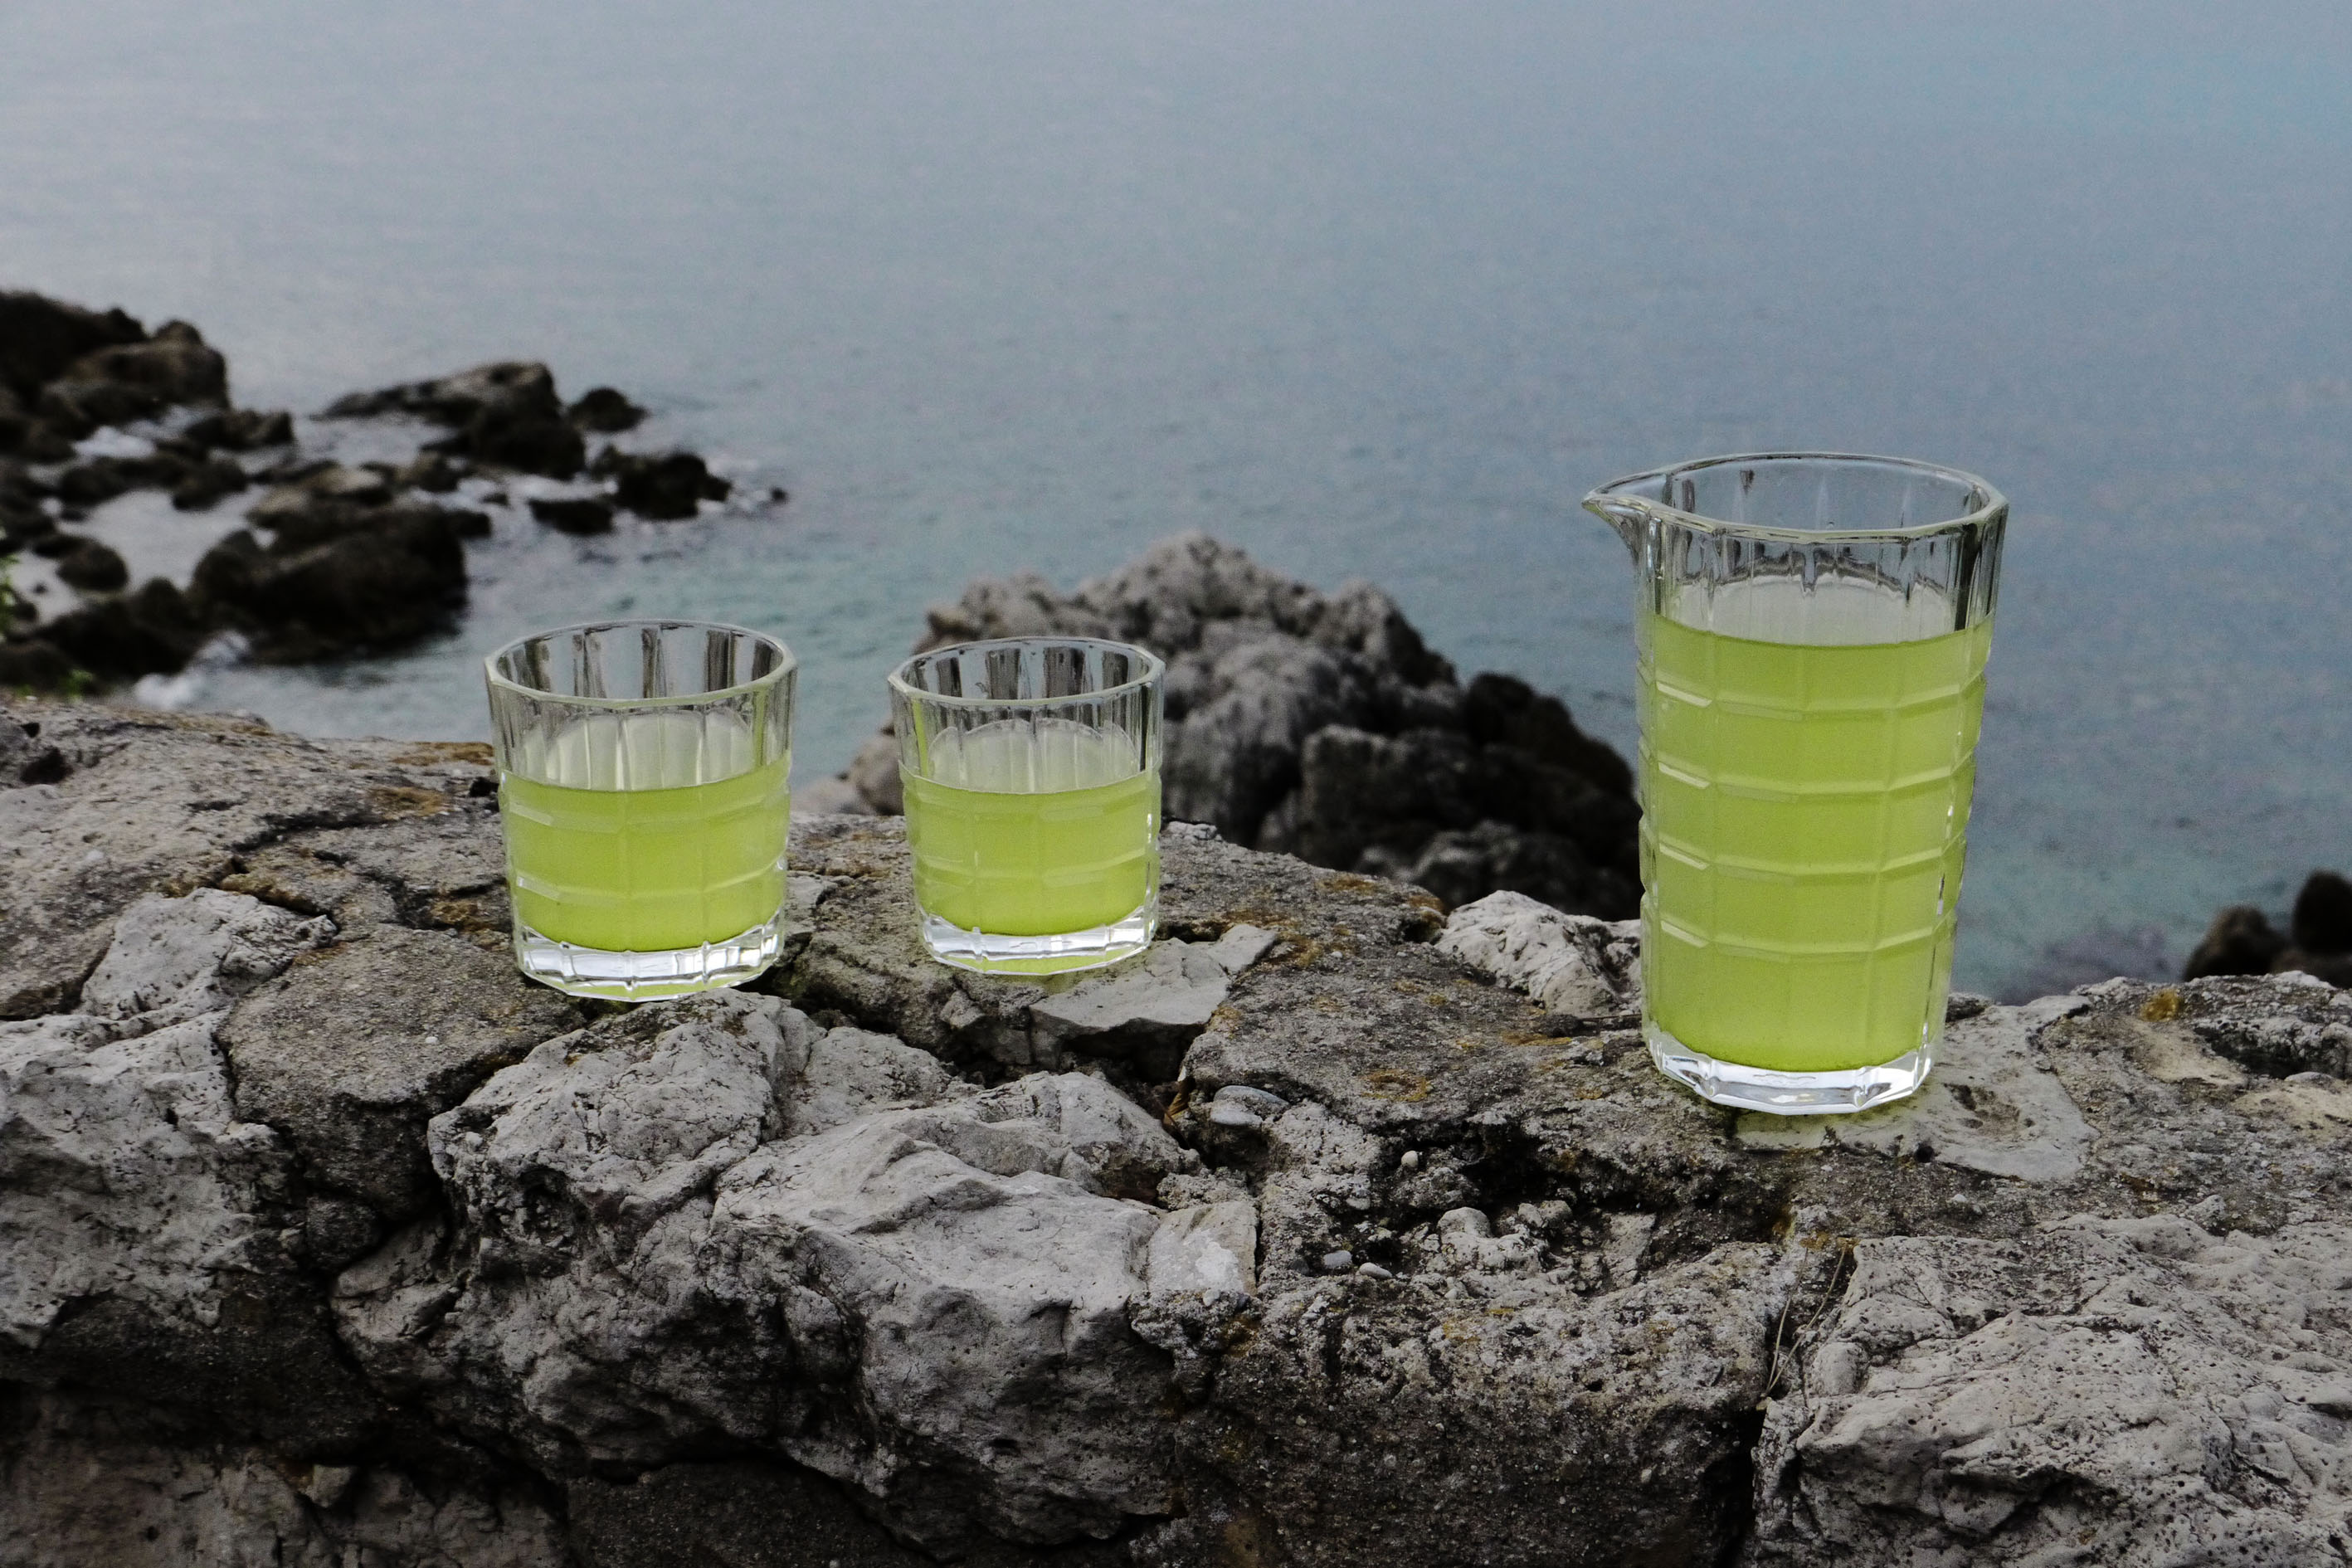 Green tea at the blue sea. Ready to enjoy both?